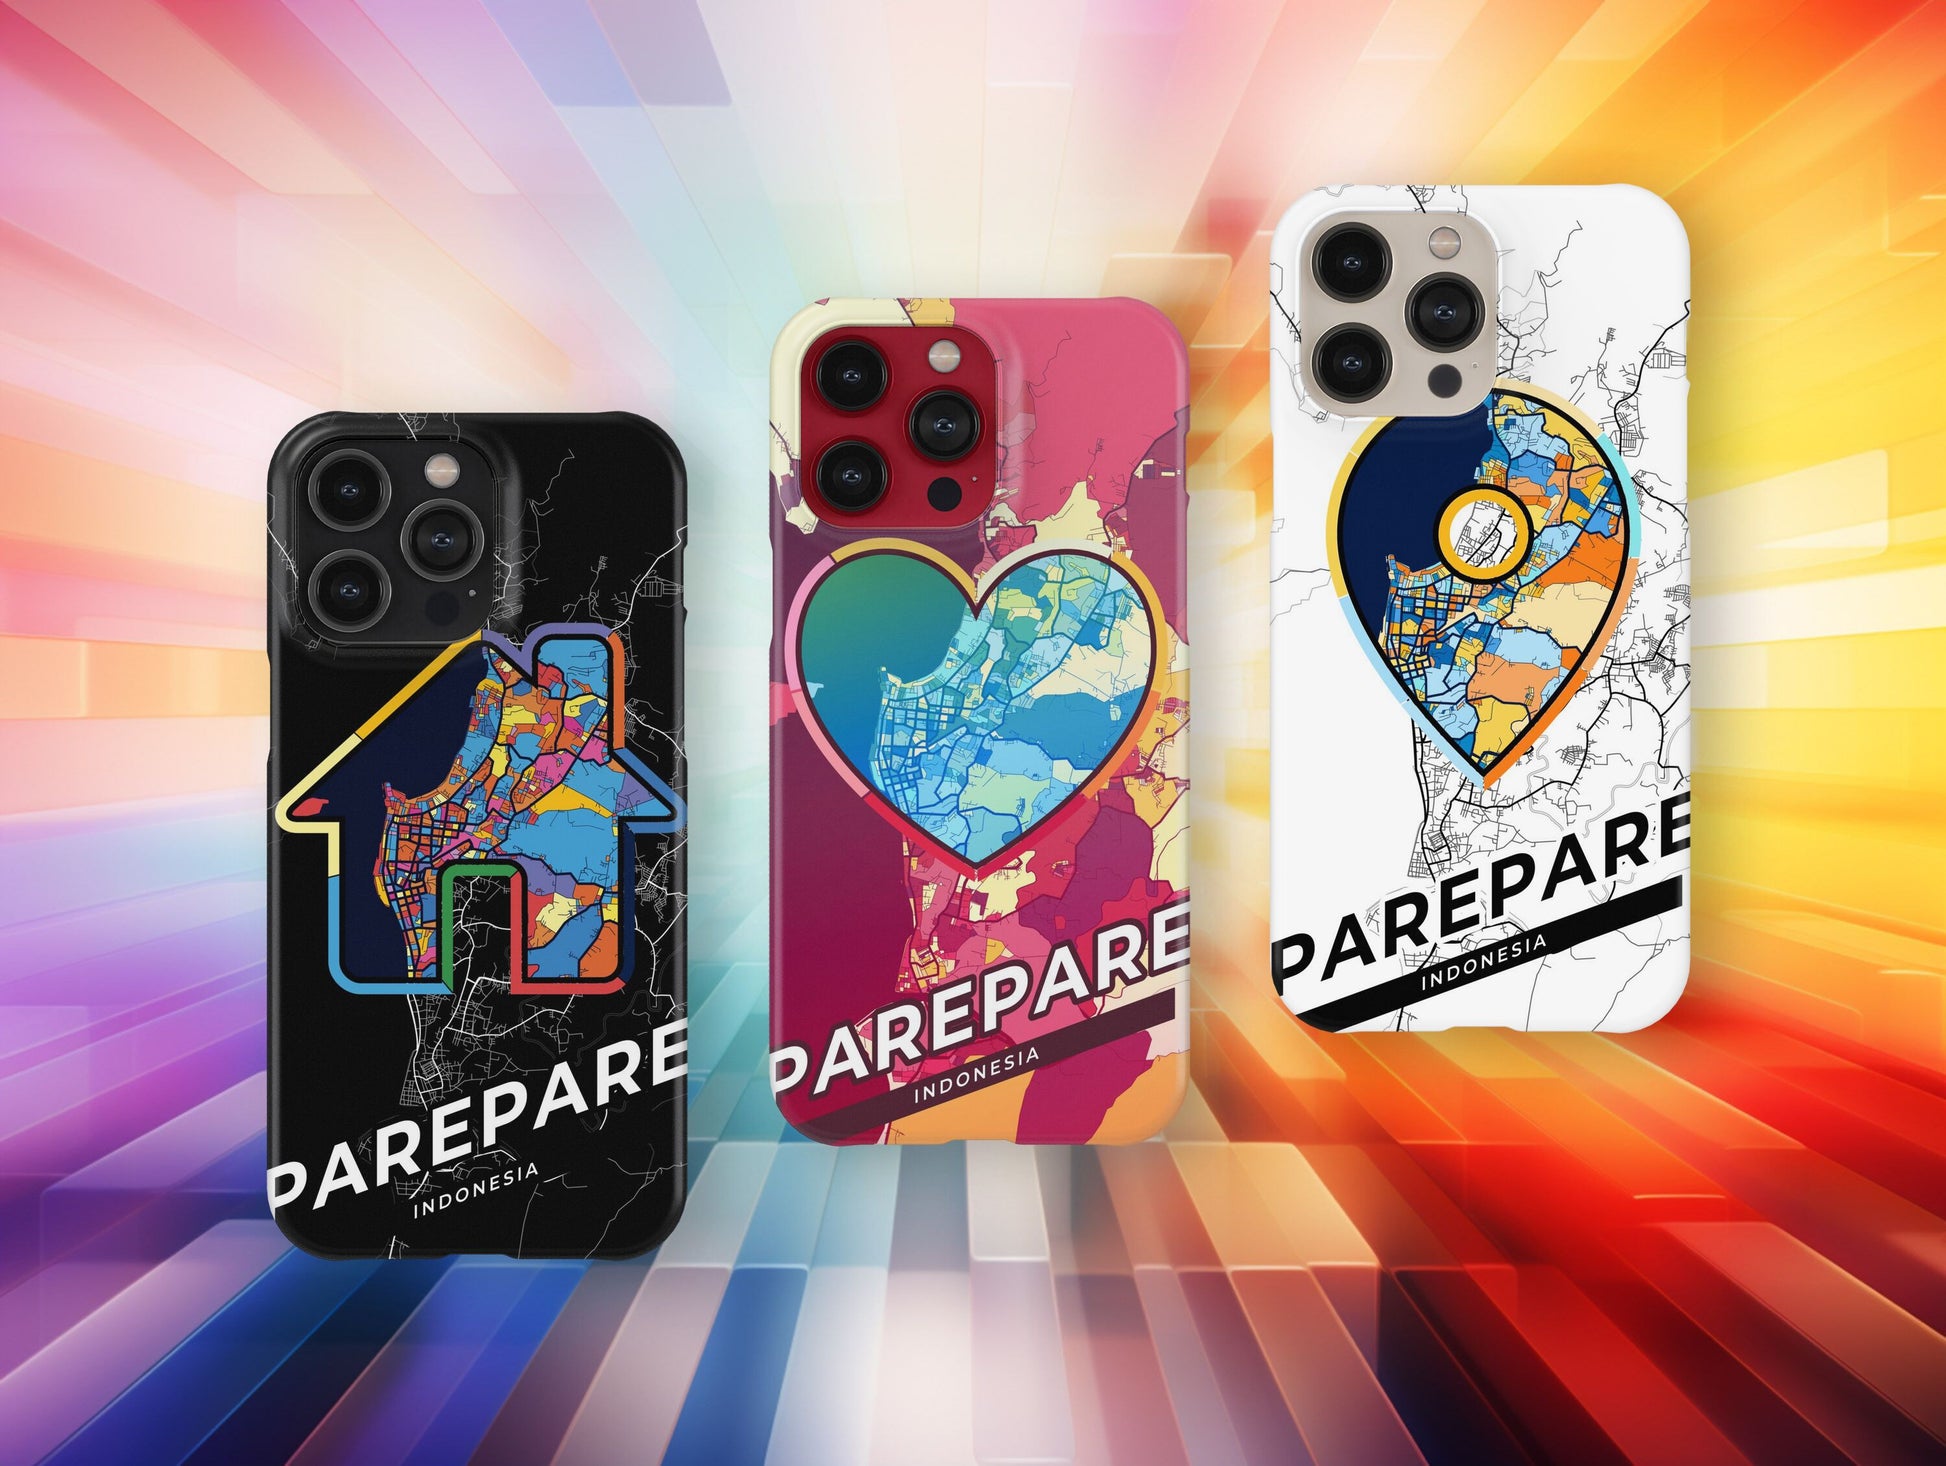 Parepare Indonesia slim phone case with colorful icon